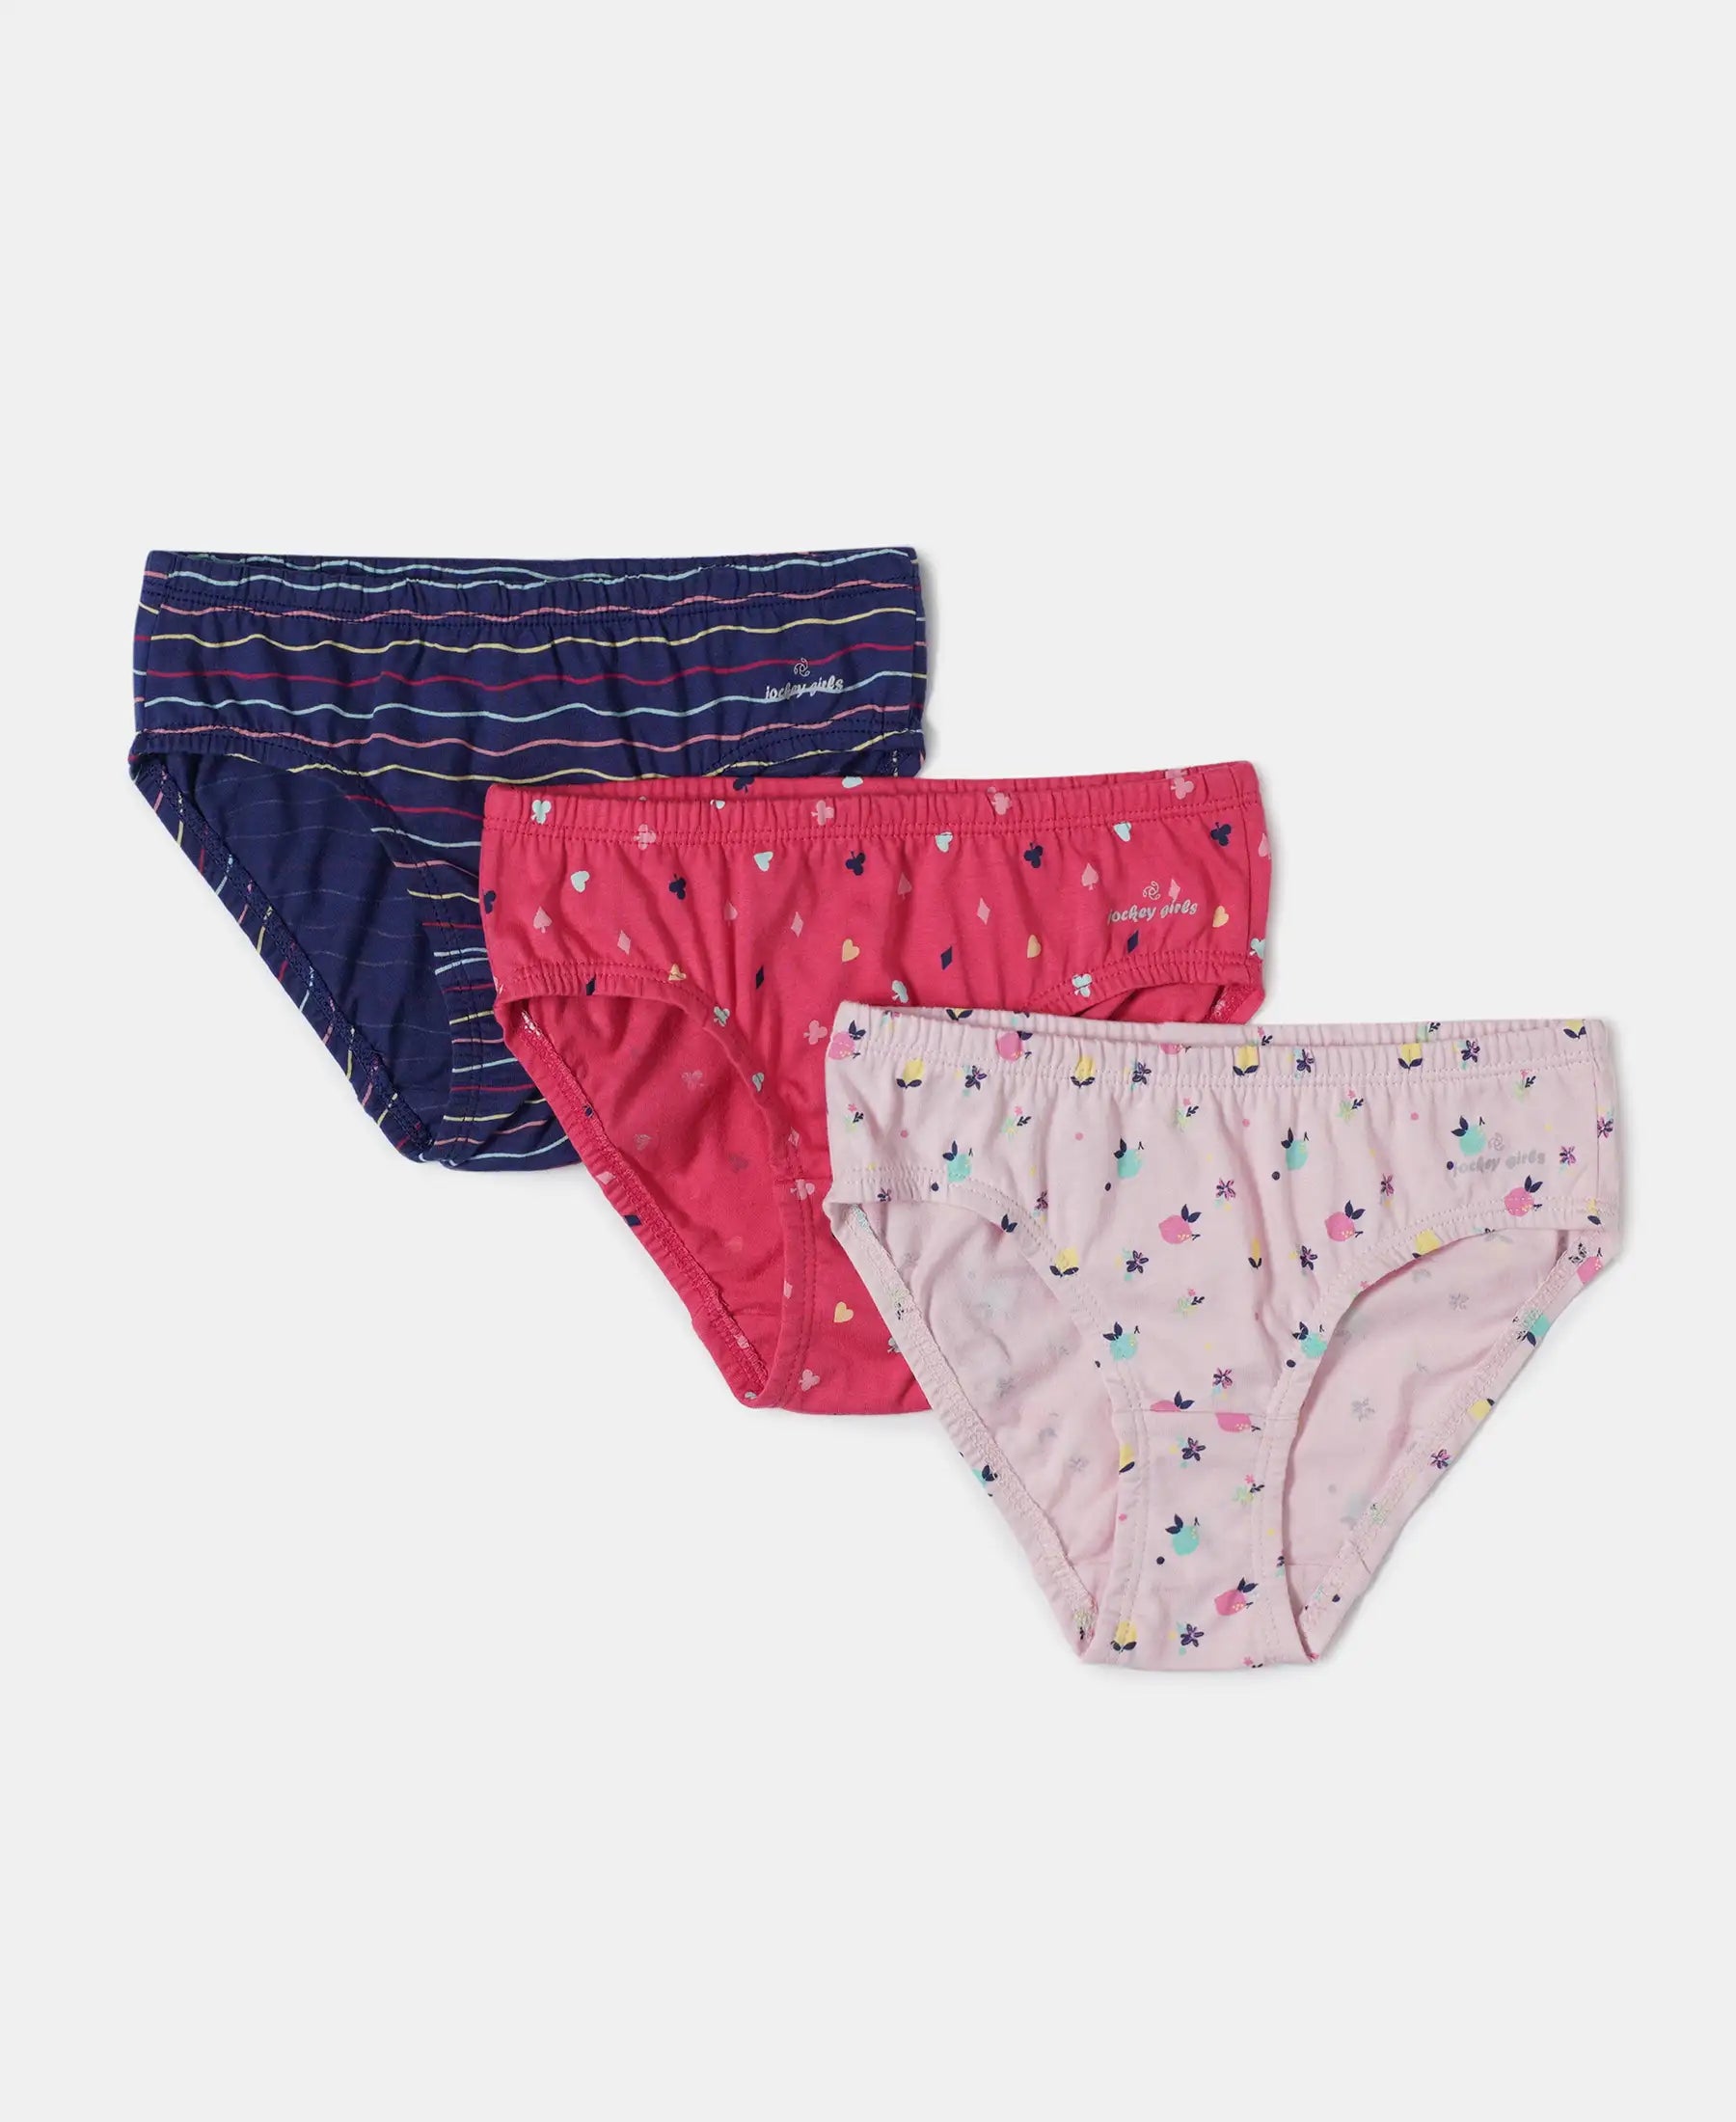  Joyo roy Toddler Underwear 3T Underwear Girls Panties